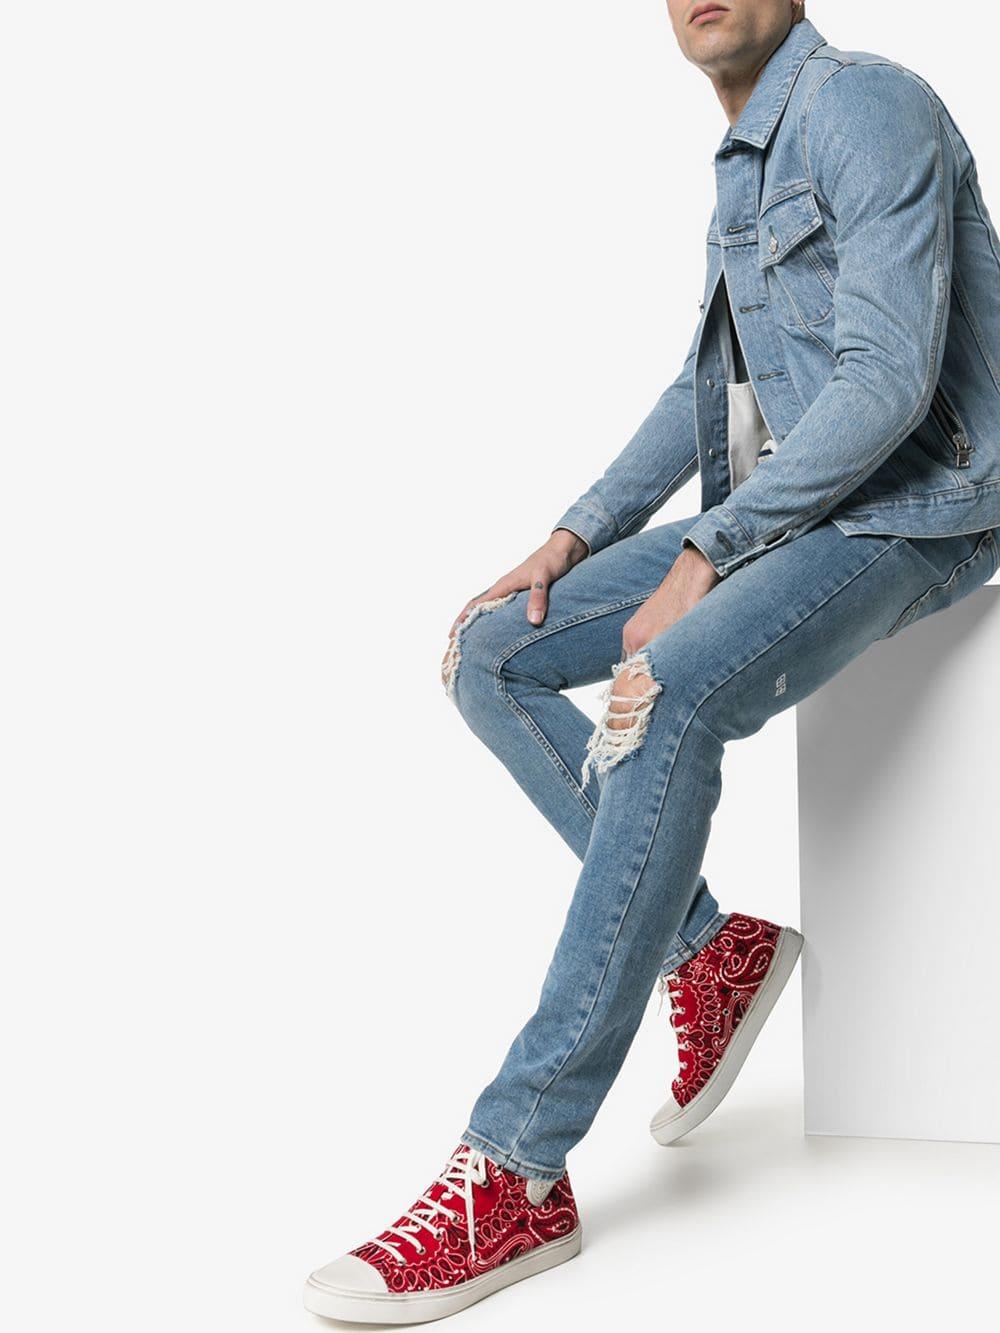 Saint Laurent Red Bandana Print Cotton High-top Sneakers for Men | Lyst